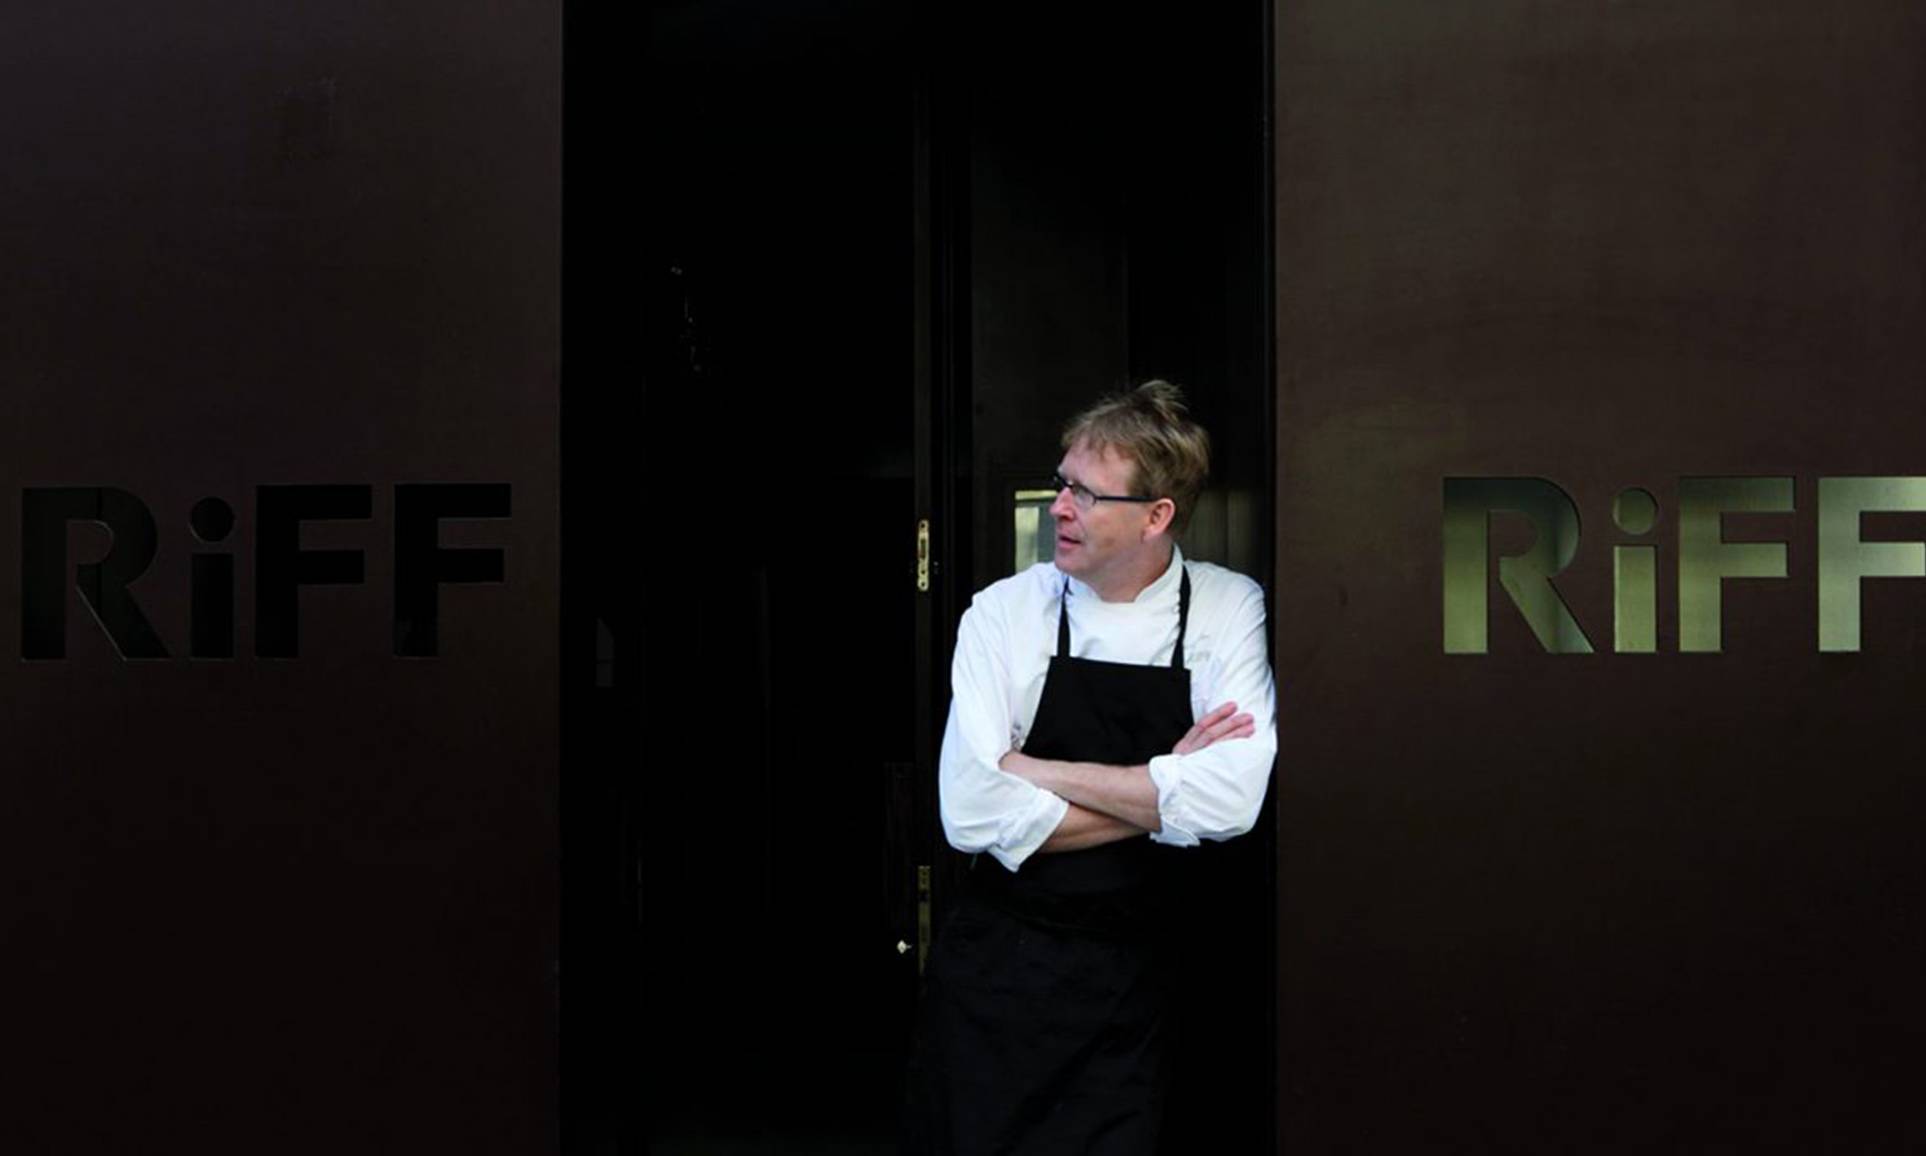 El chef Bernd H. Knöller en la fachada del Riff.